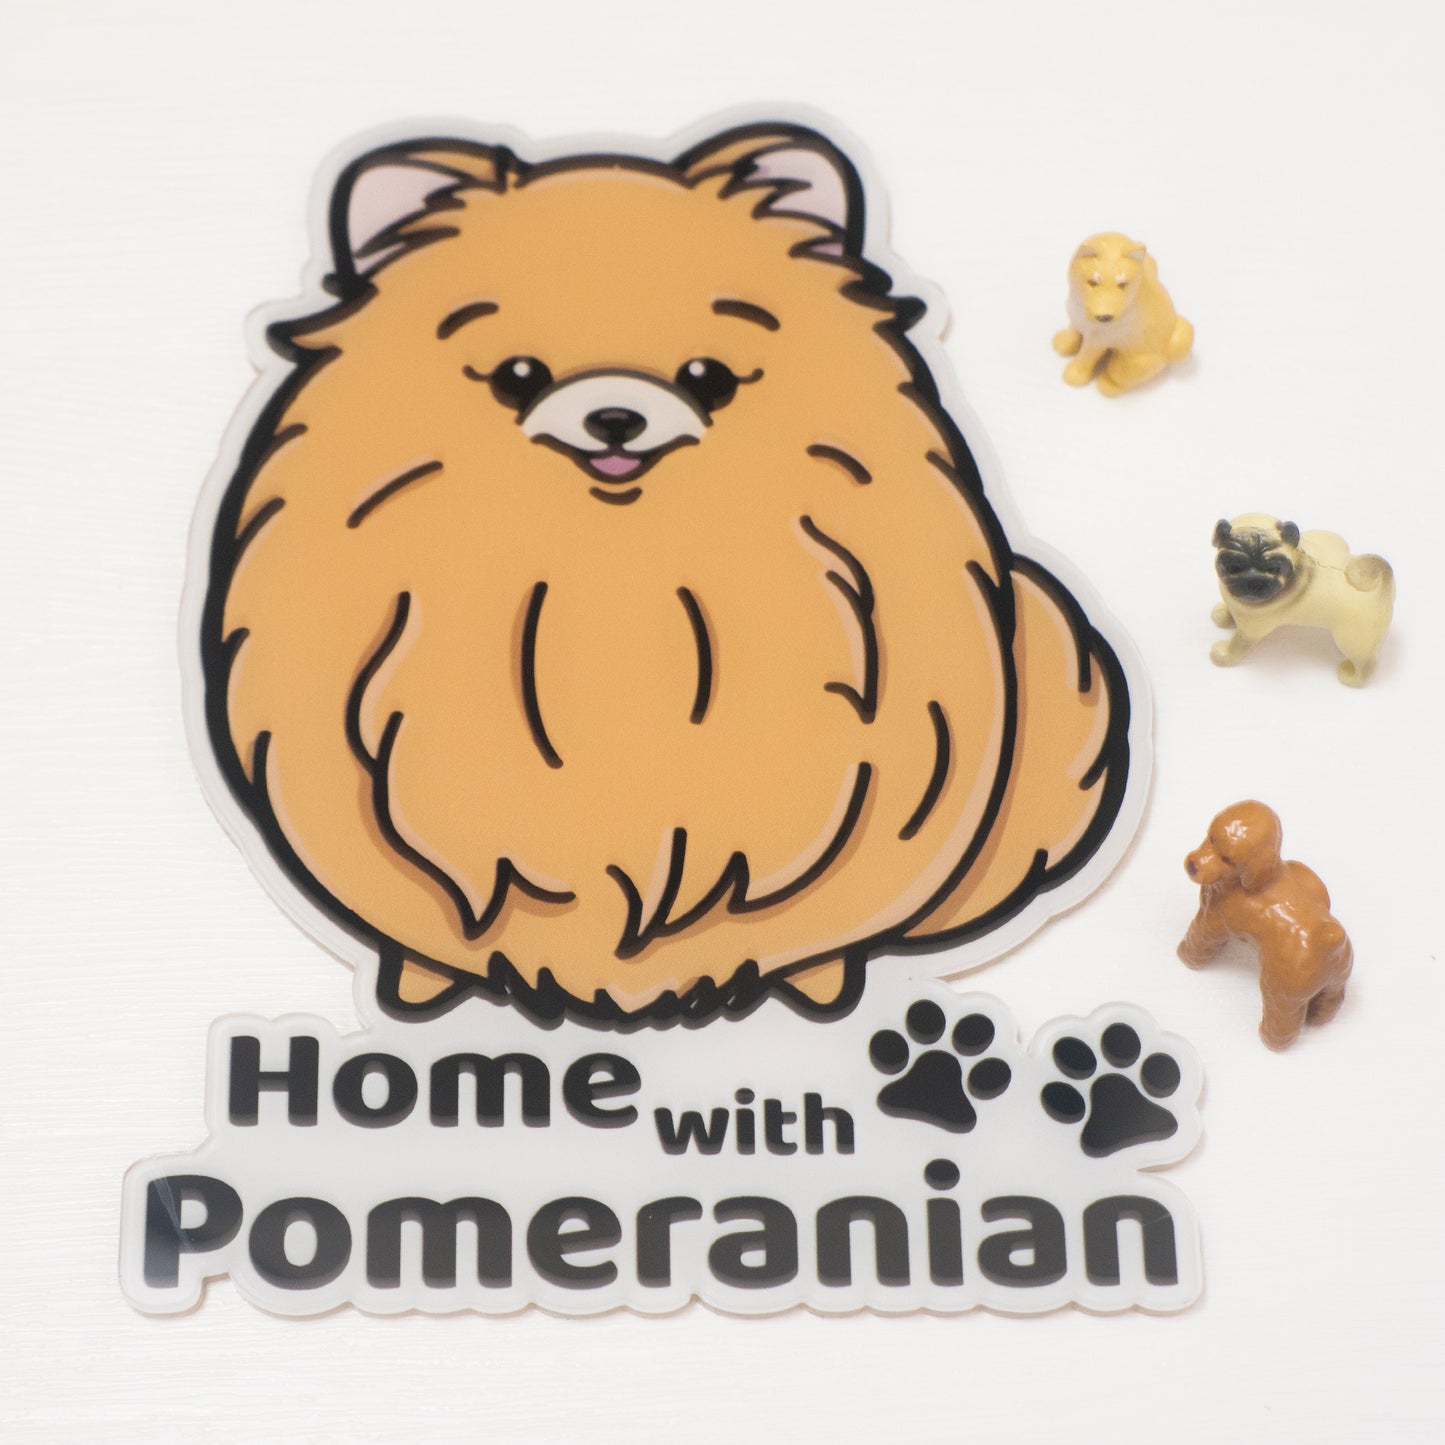 Home with Pomeranian 松鼠狗 博美犬門牌